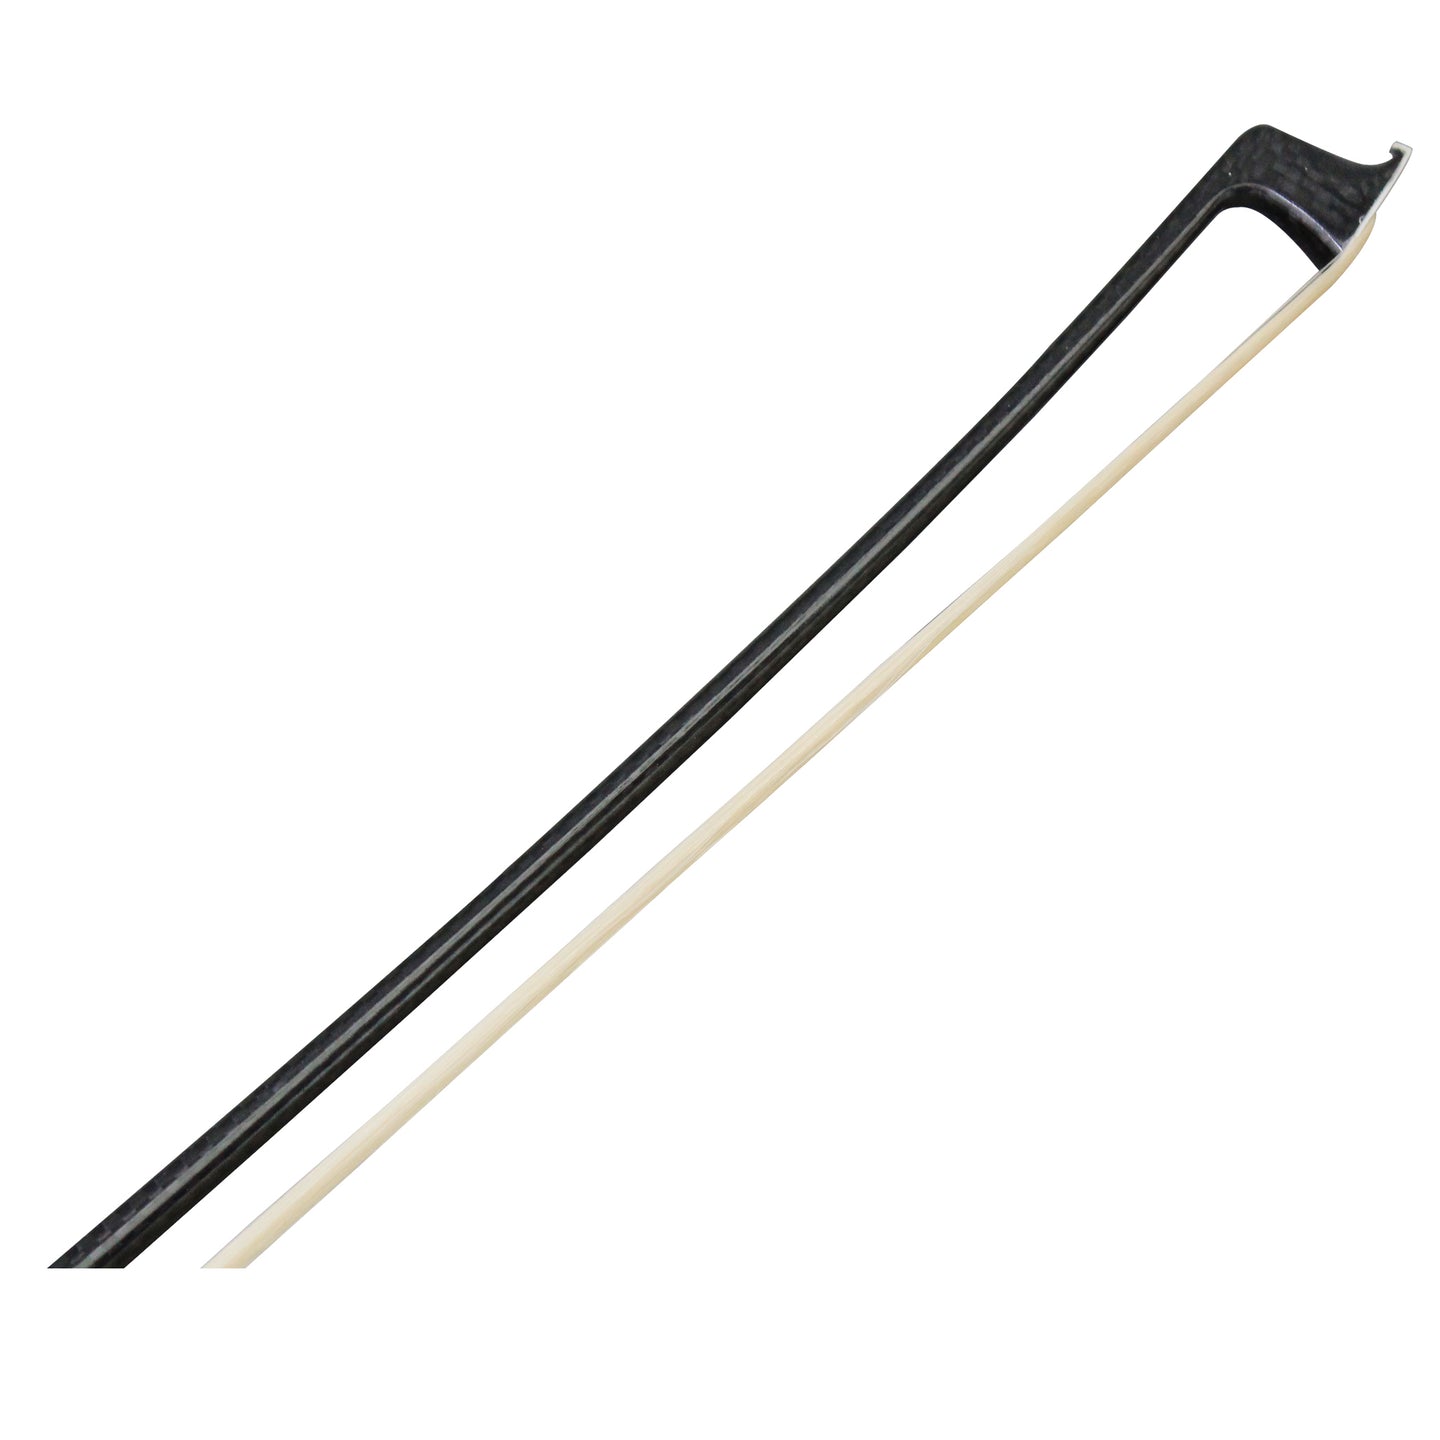 202A black weave carbon fiber viola bow tip